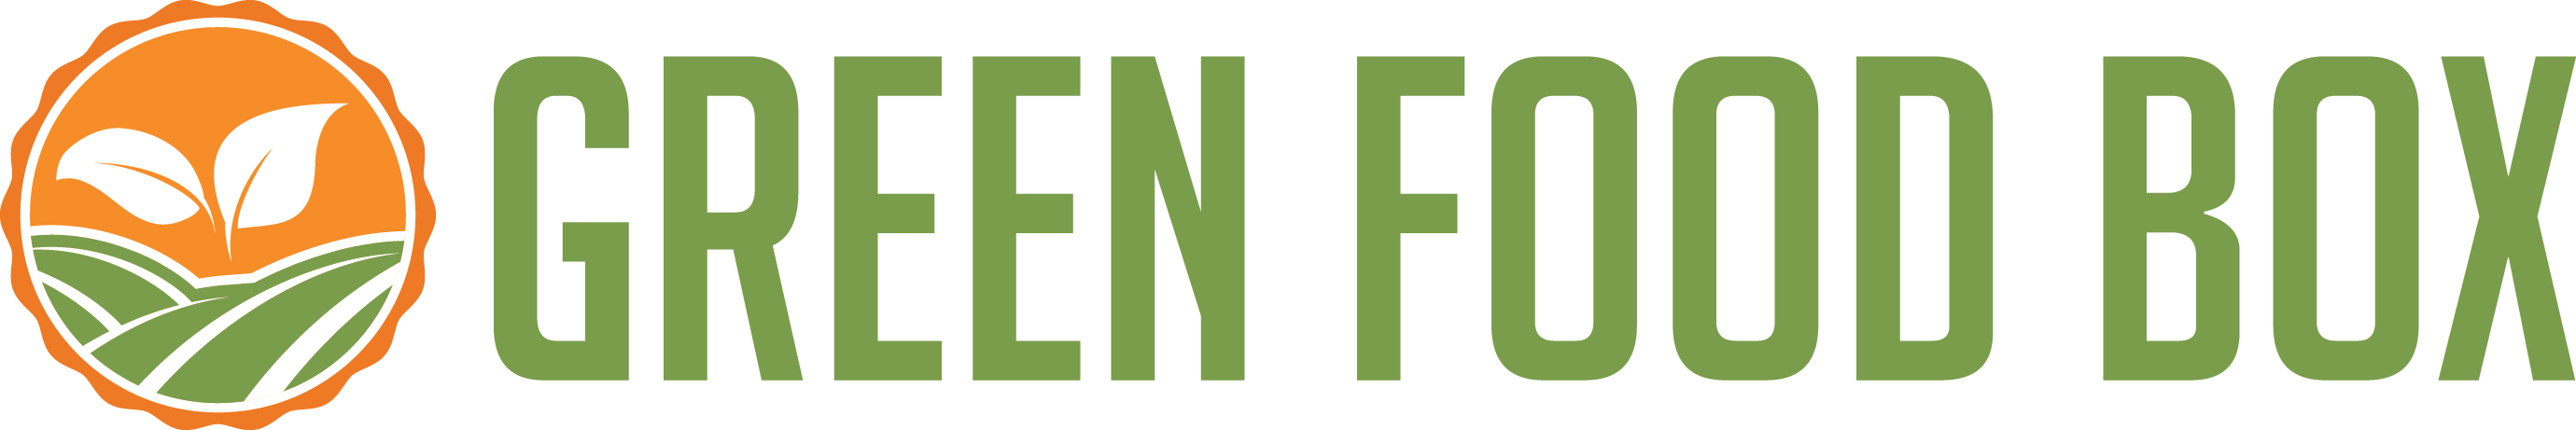 Green Food Box Logo Colour English